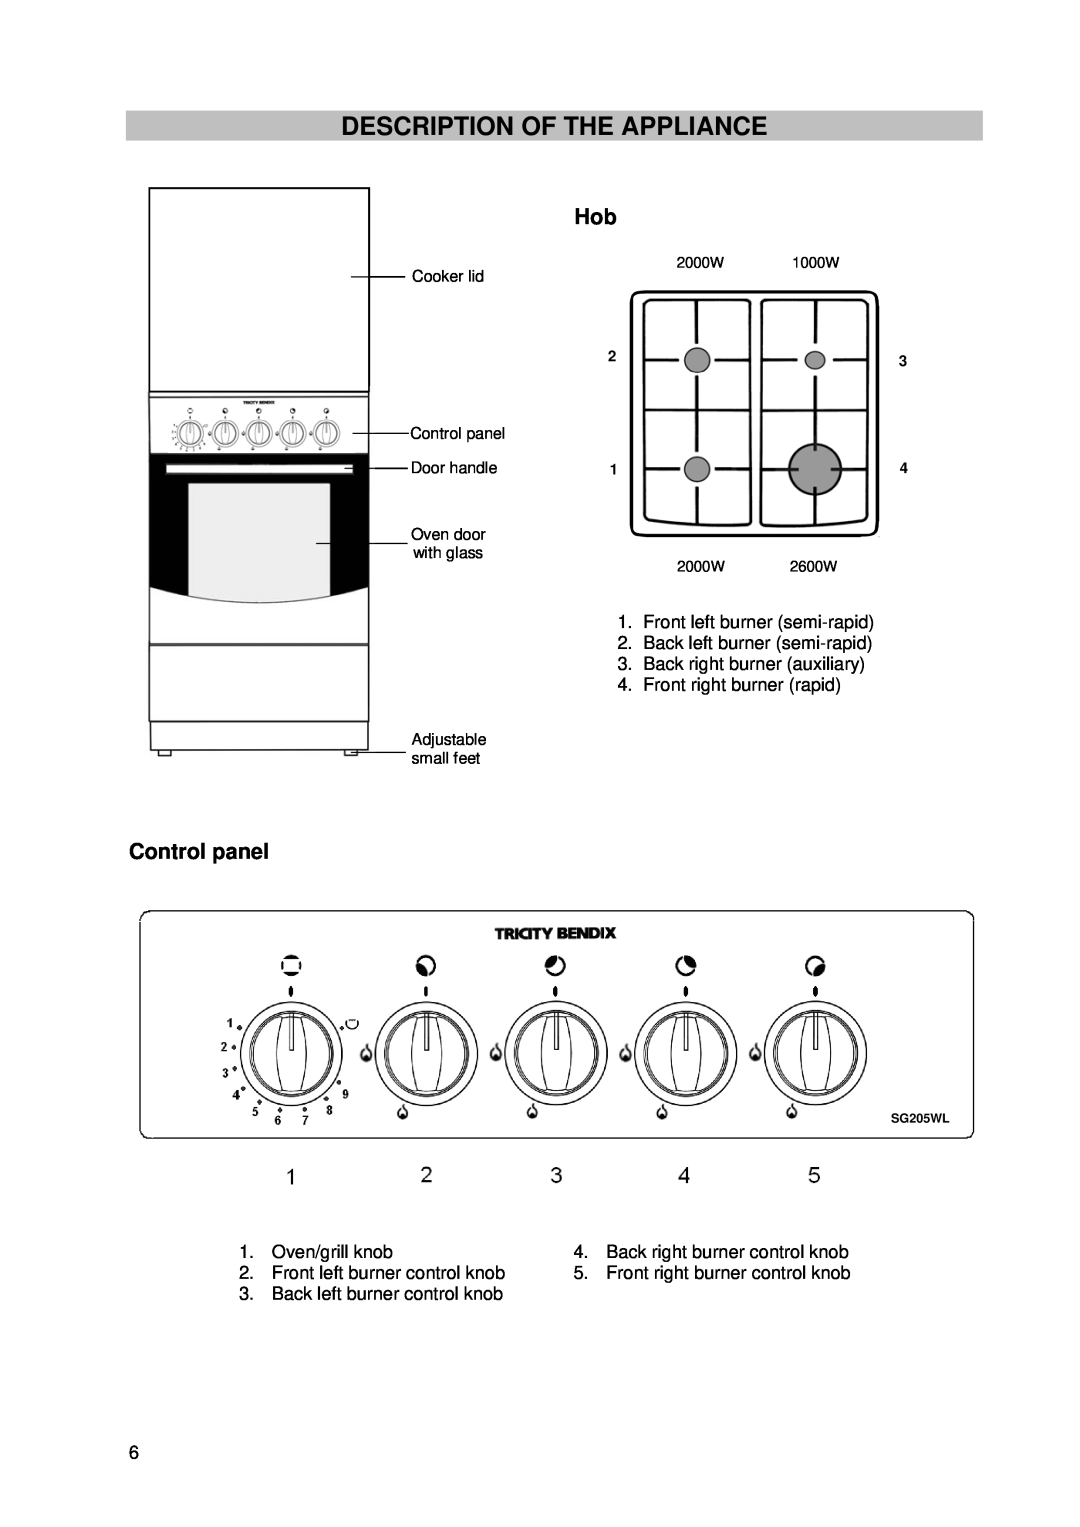 Tricity Bendix SG 205WL manual Description Of The Appliance, Control panel 